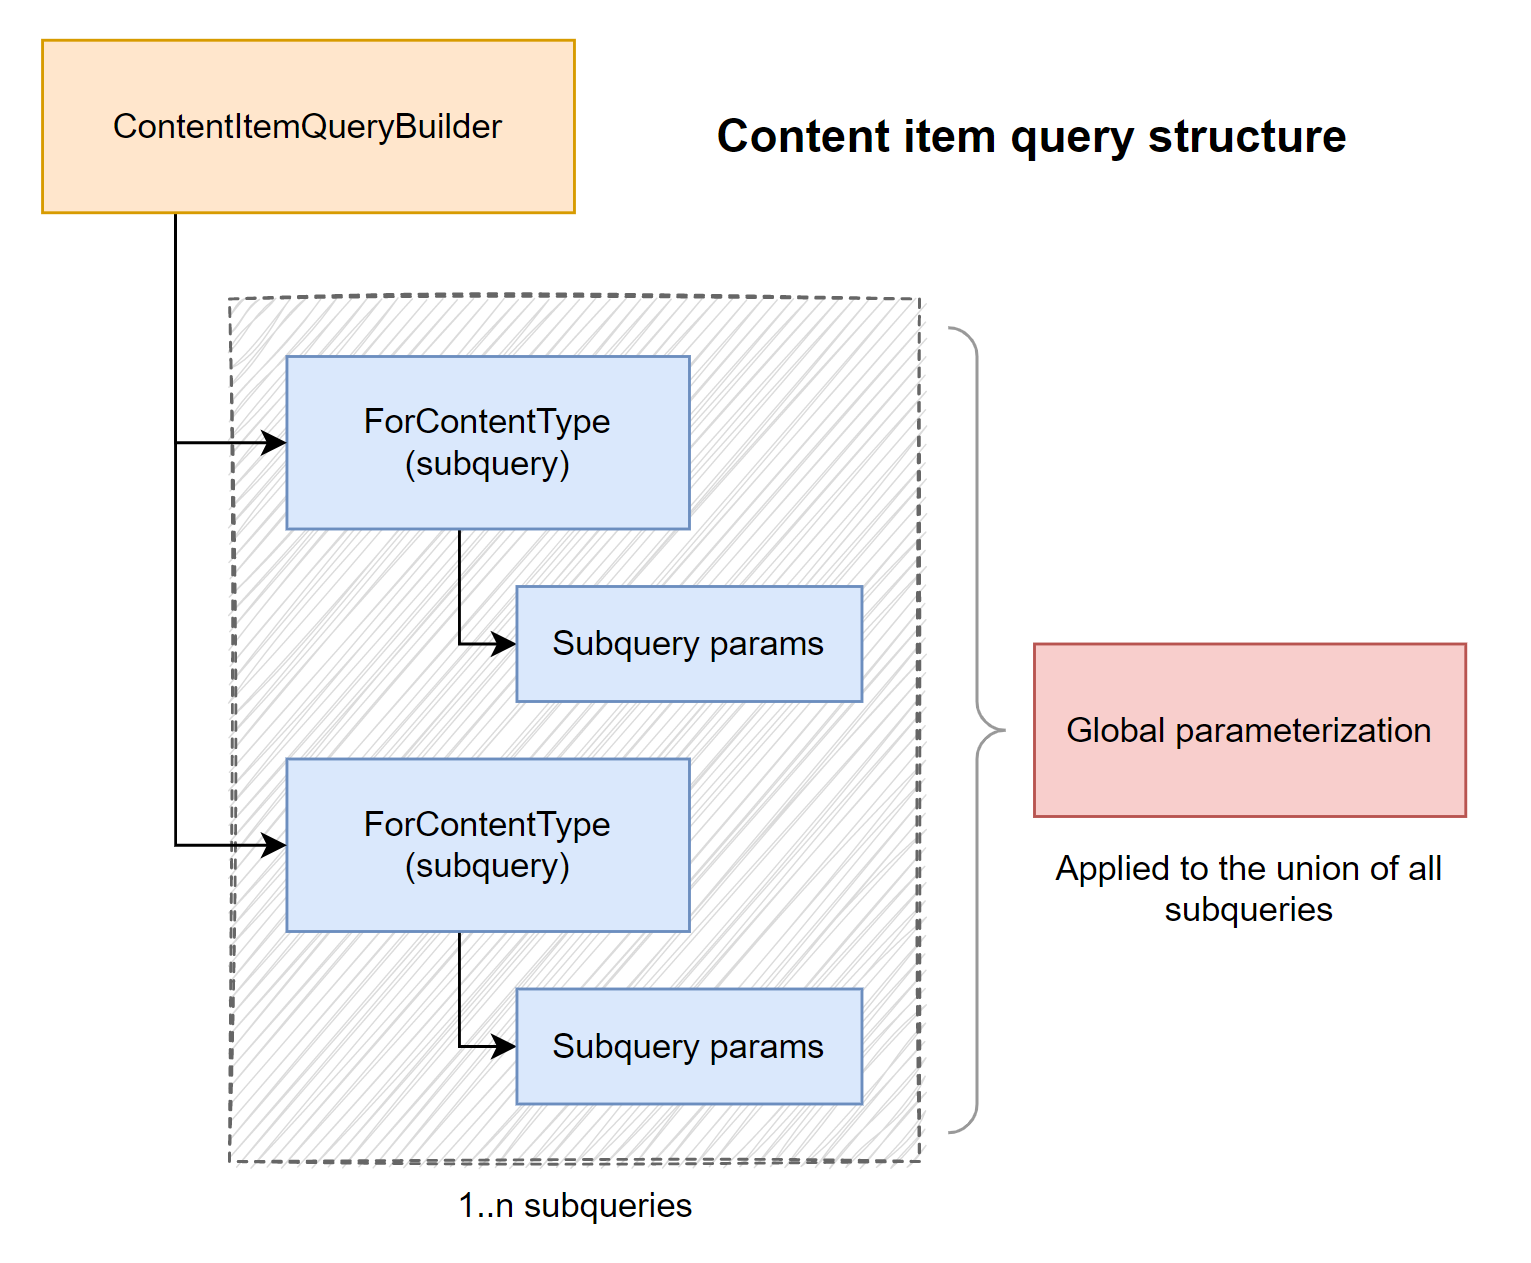 Content item query structure diagram